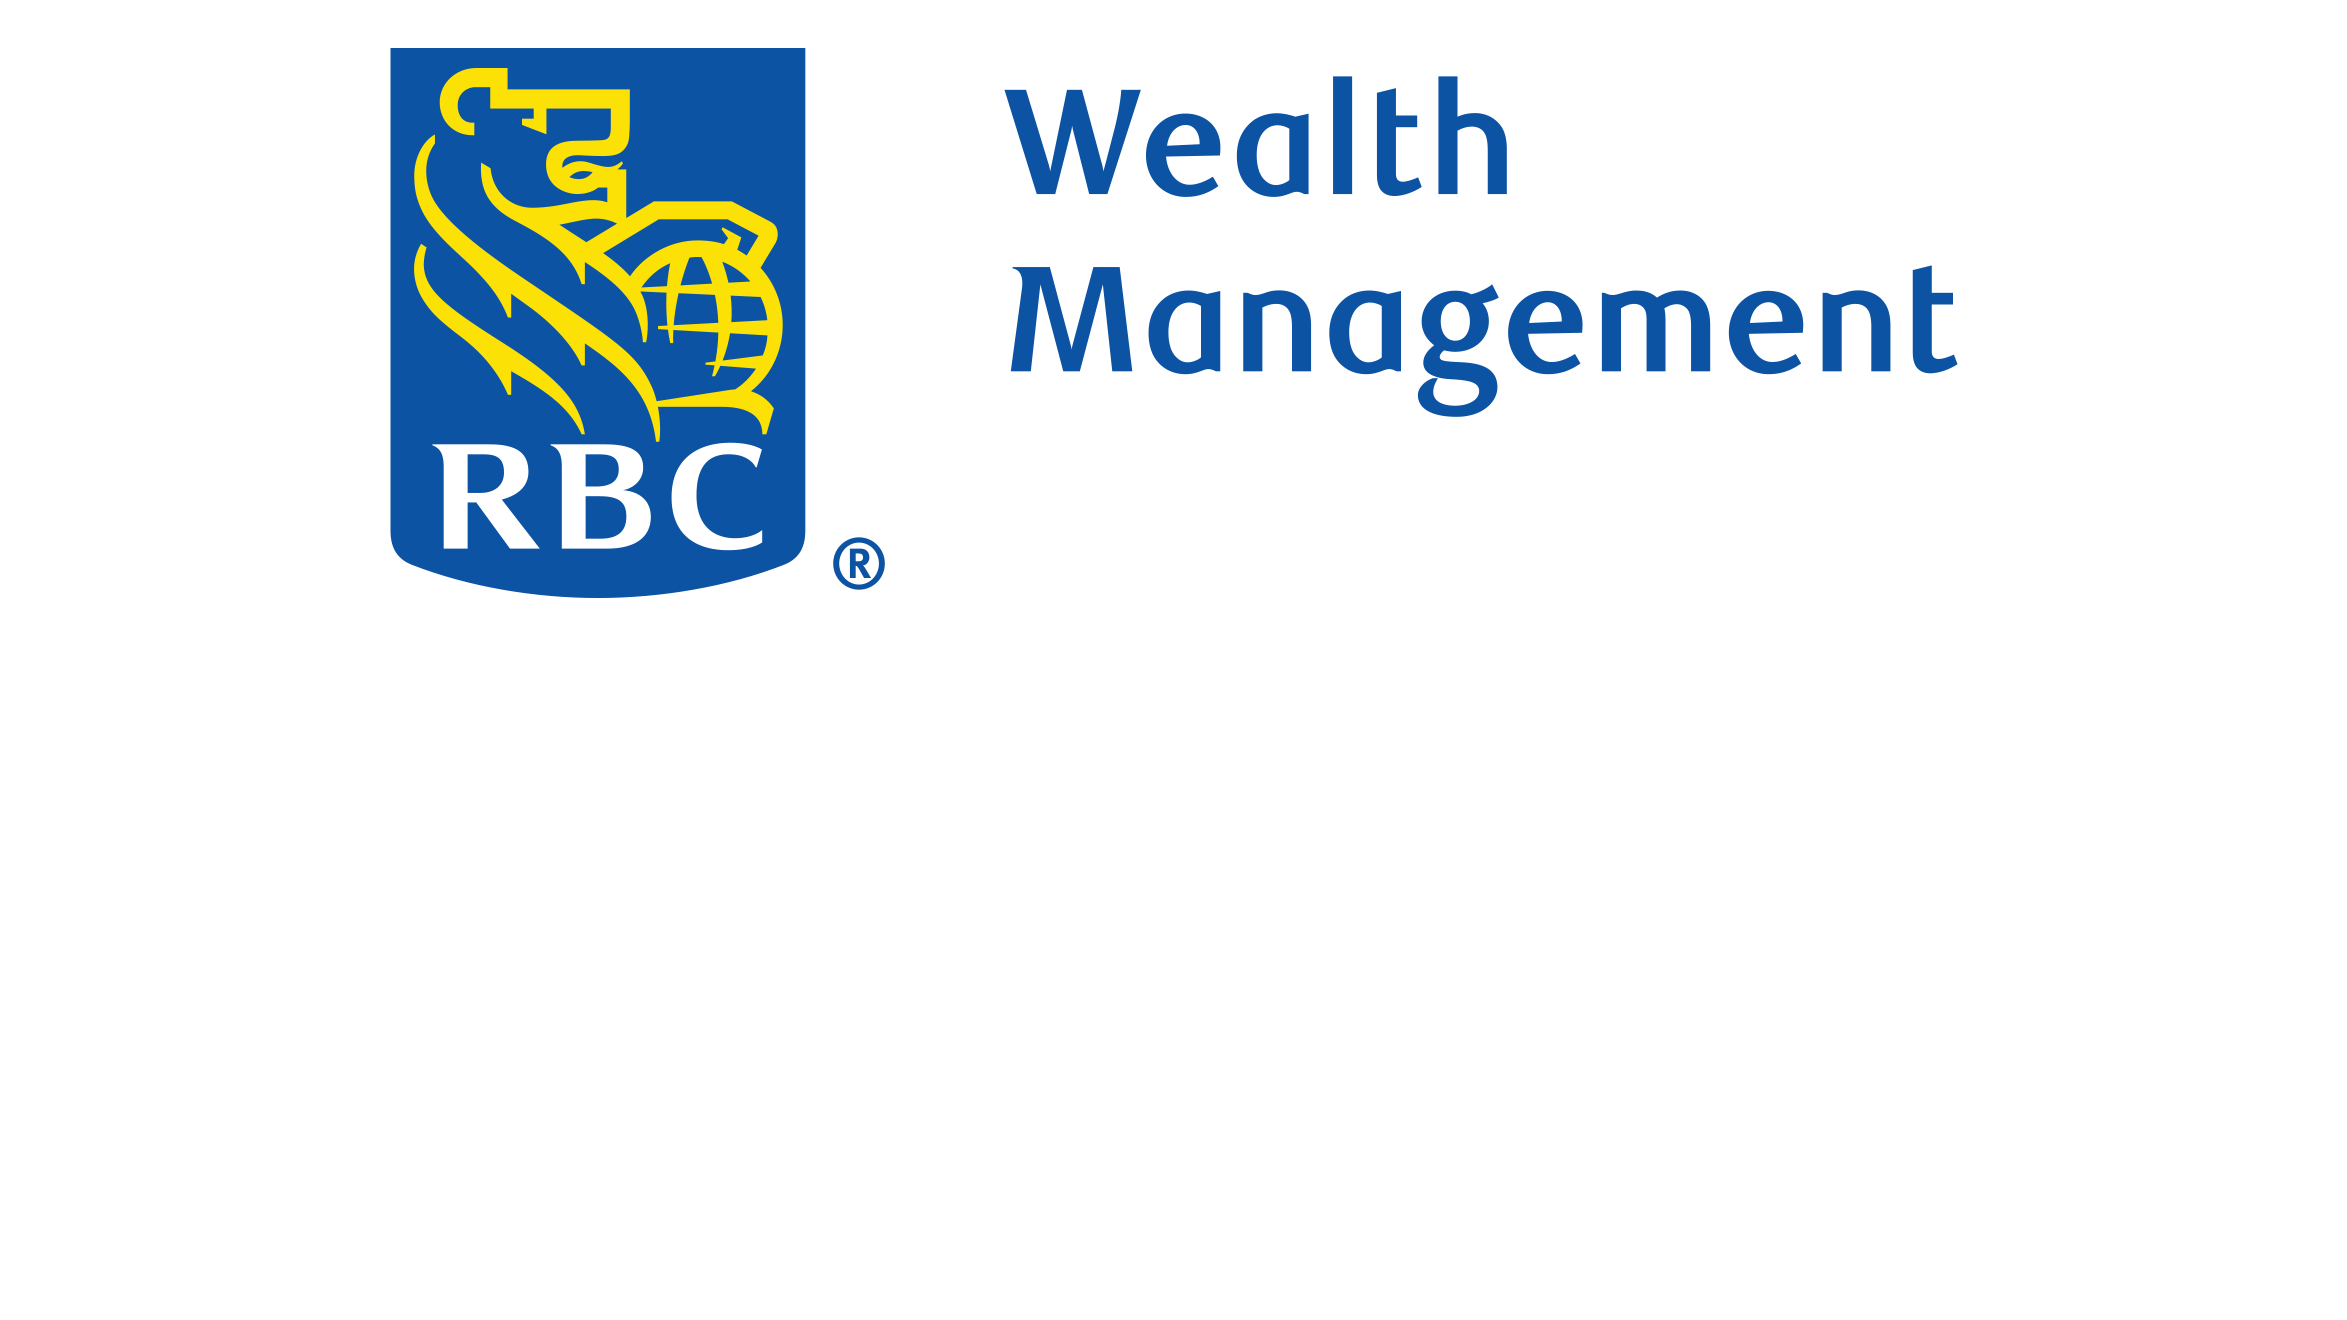 Wealth management logo